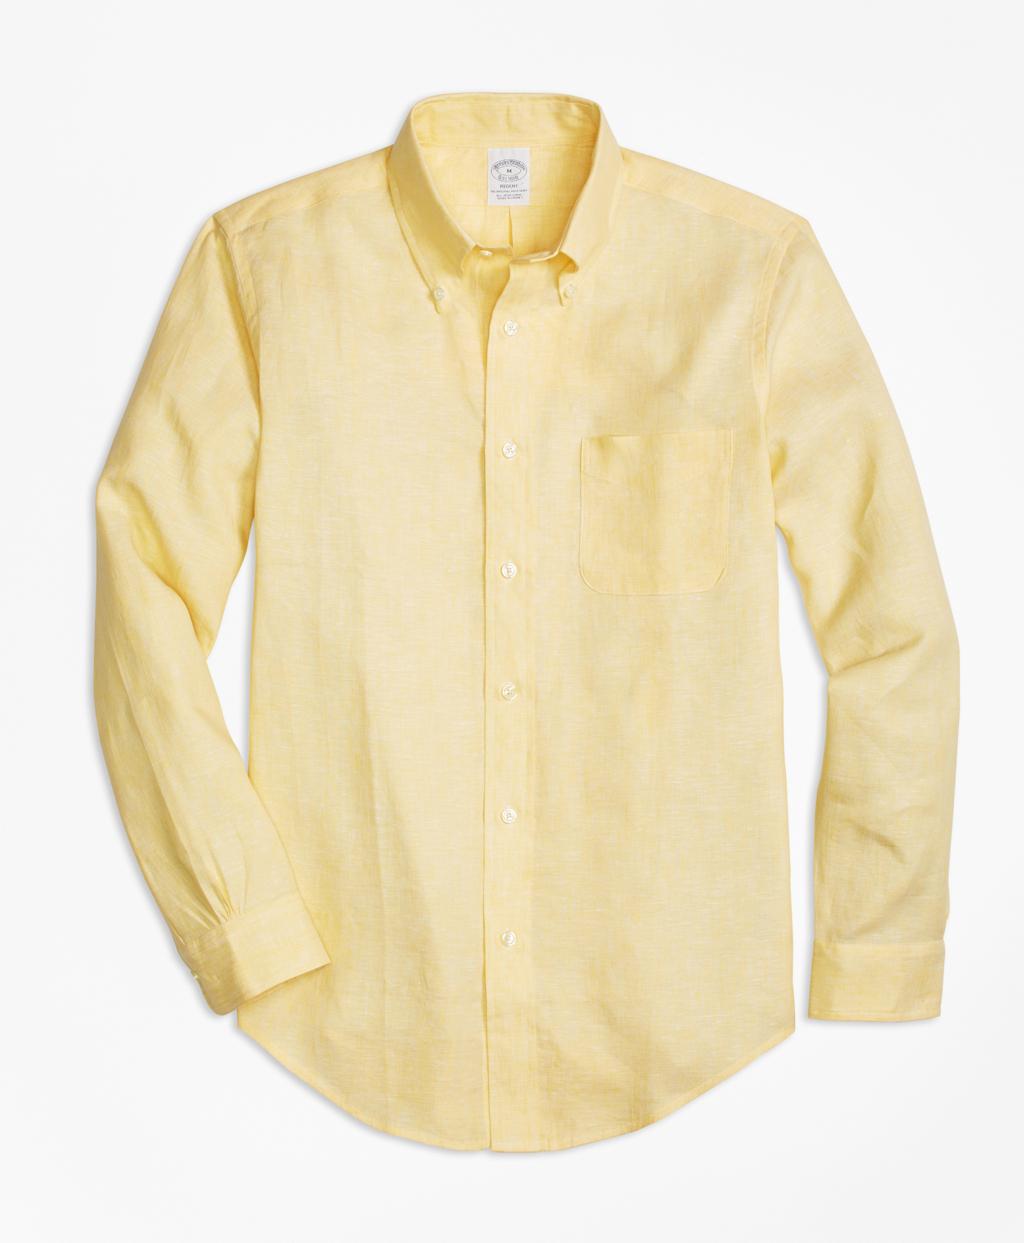 Brooks Brothers Regent Fit Irish Linen Sport Shirt in Yellow for Men - Lyst